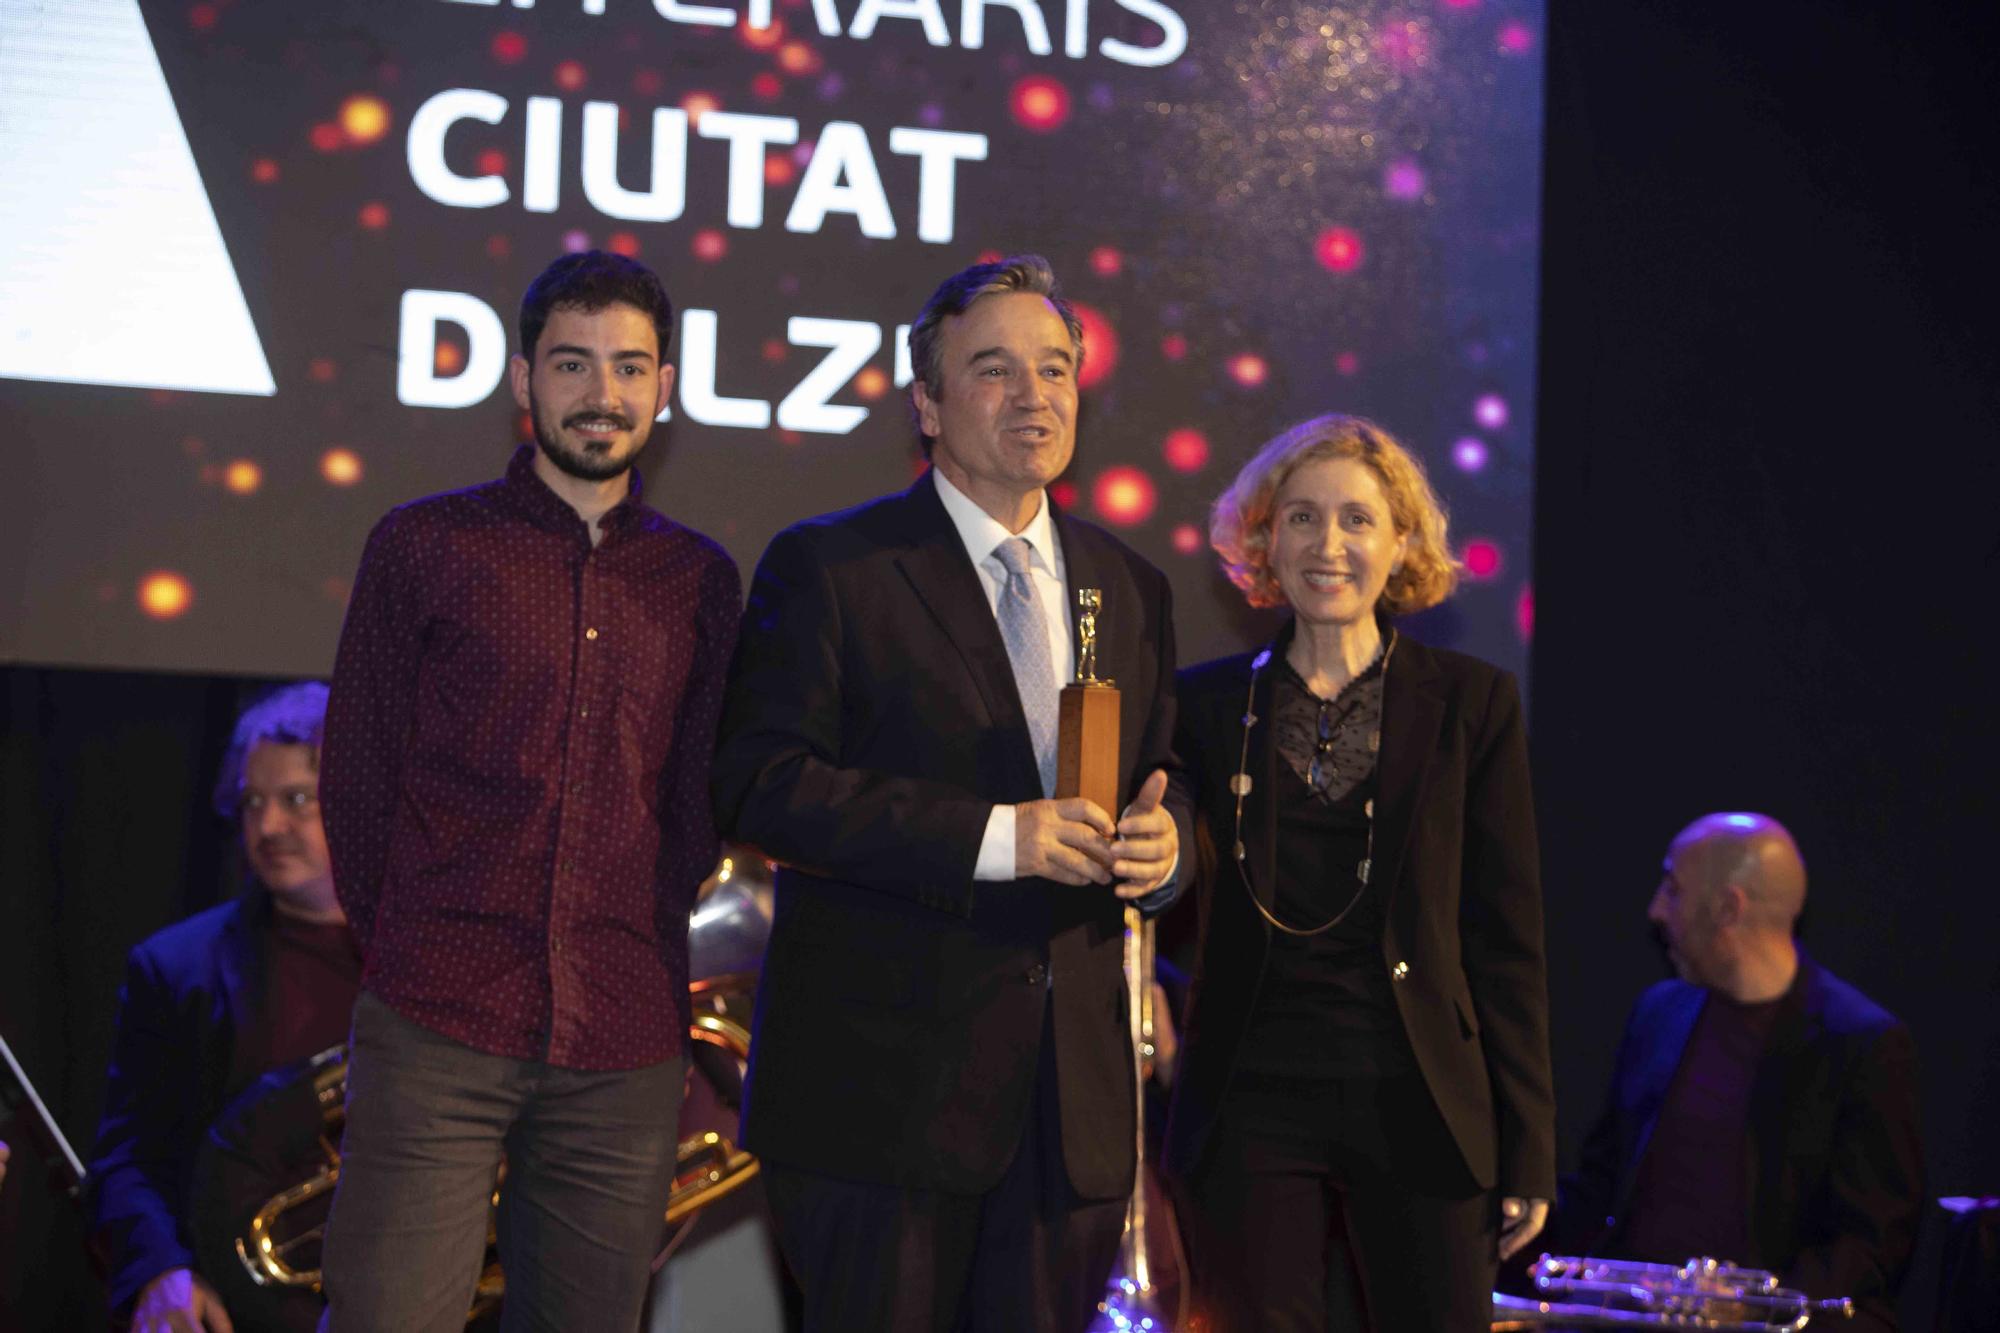 Premis Literaris Ciutat d’Alzira 2022